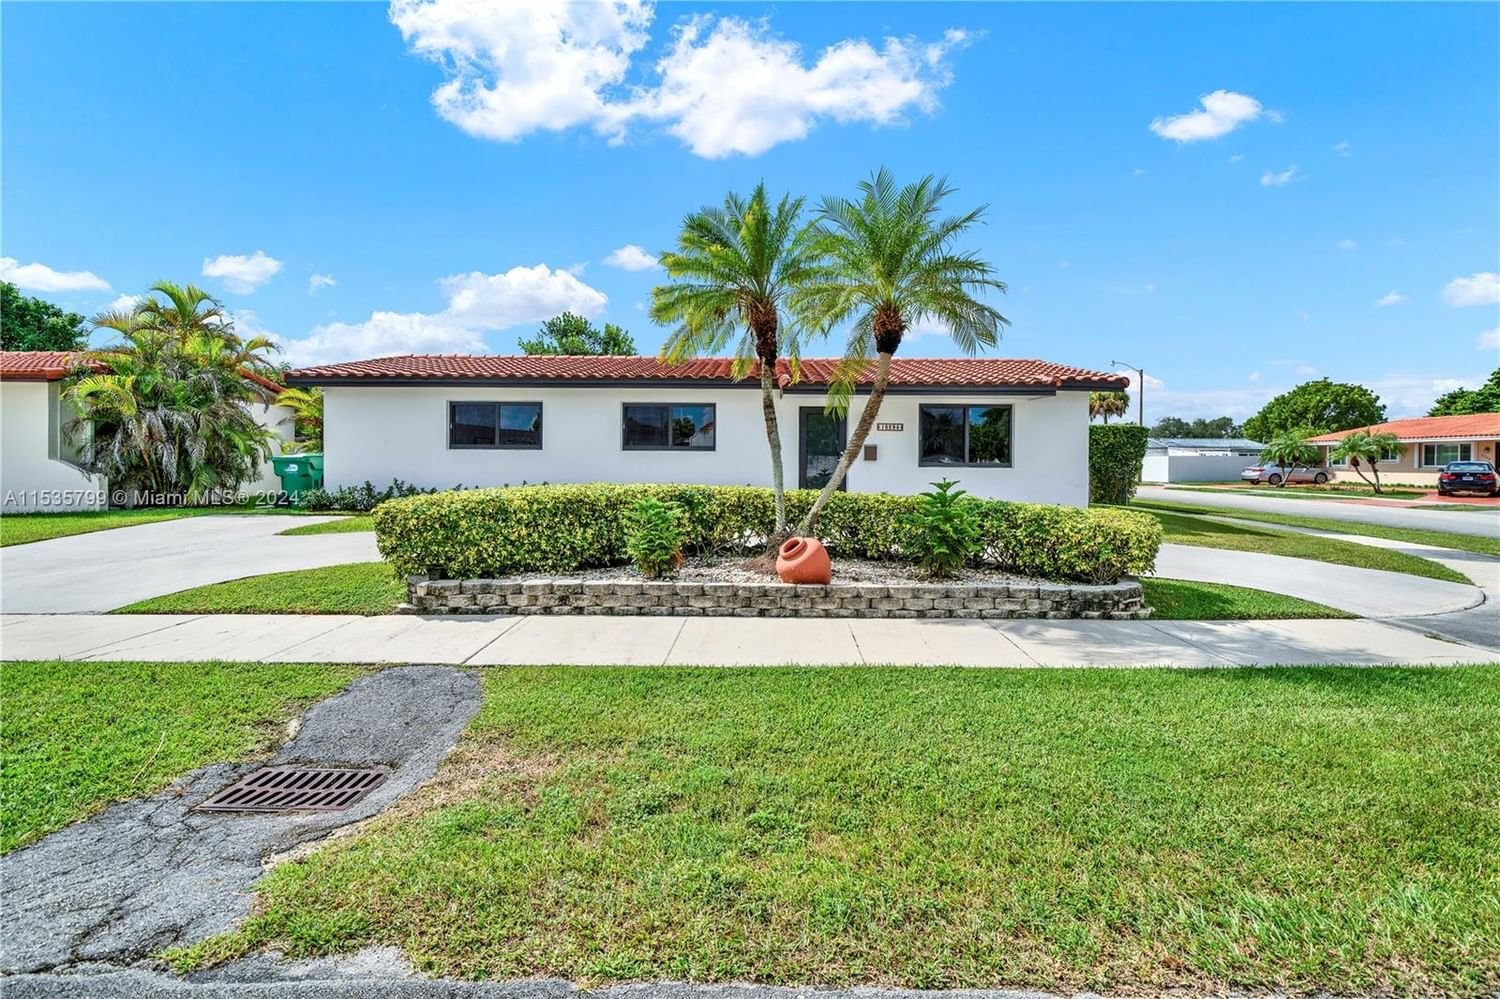 Real estate property located at 10294 33rd St, Miami-Dade County, MARTINEZ SUB, Miami, FL